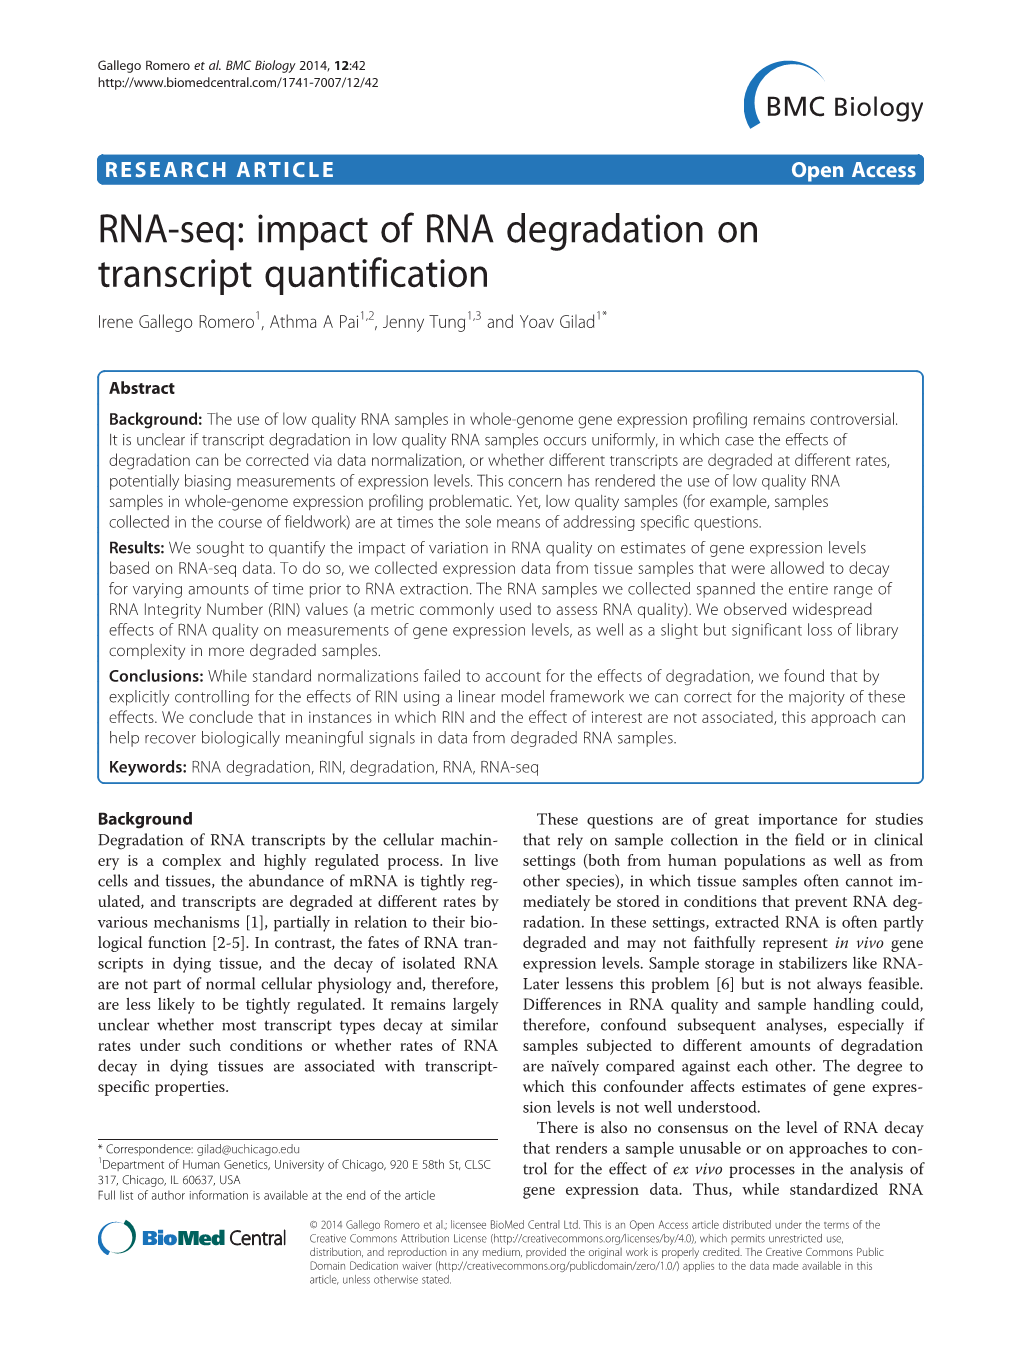 RNA-Seq: Impact of RNA Degradation on Transcript Quantification Irene Gallego Romero1, Athma a Pai1,2, Jenny Tung1,3 and Yoav Gilad1*